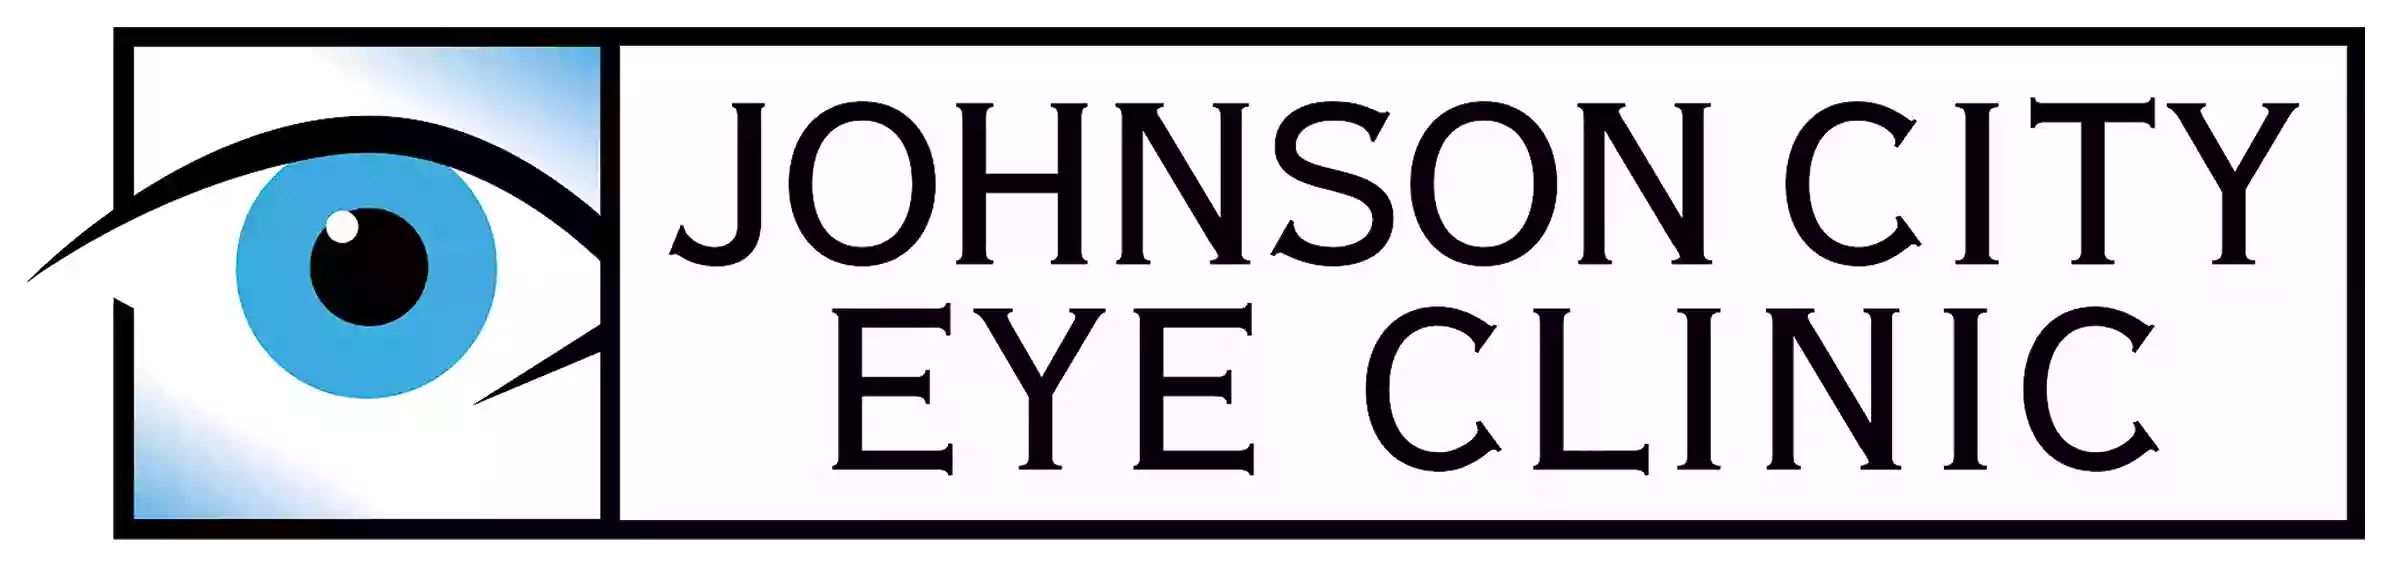 Johnson City Eye Clinic and Surgery Center